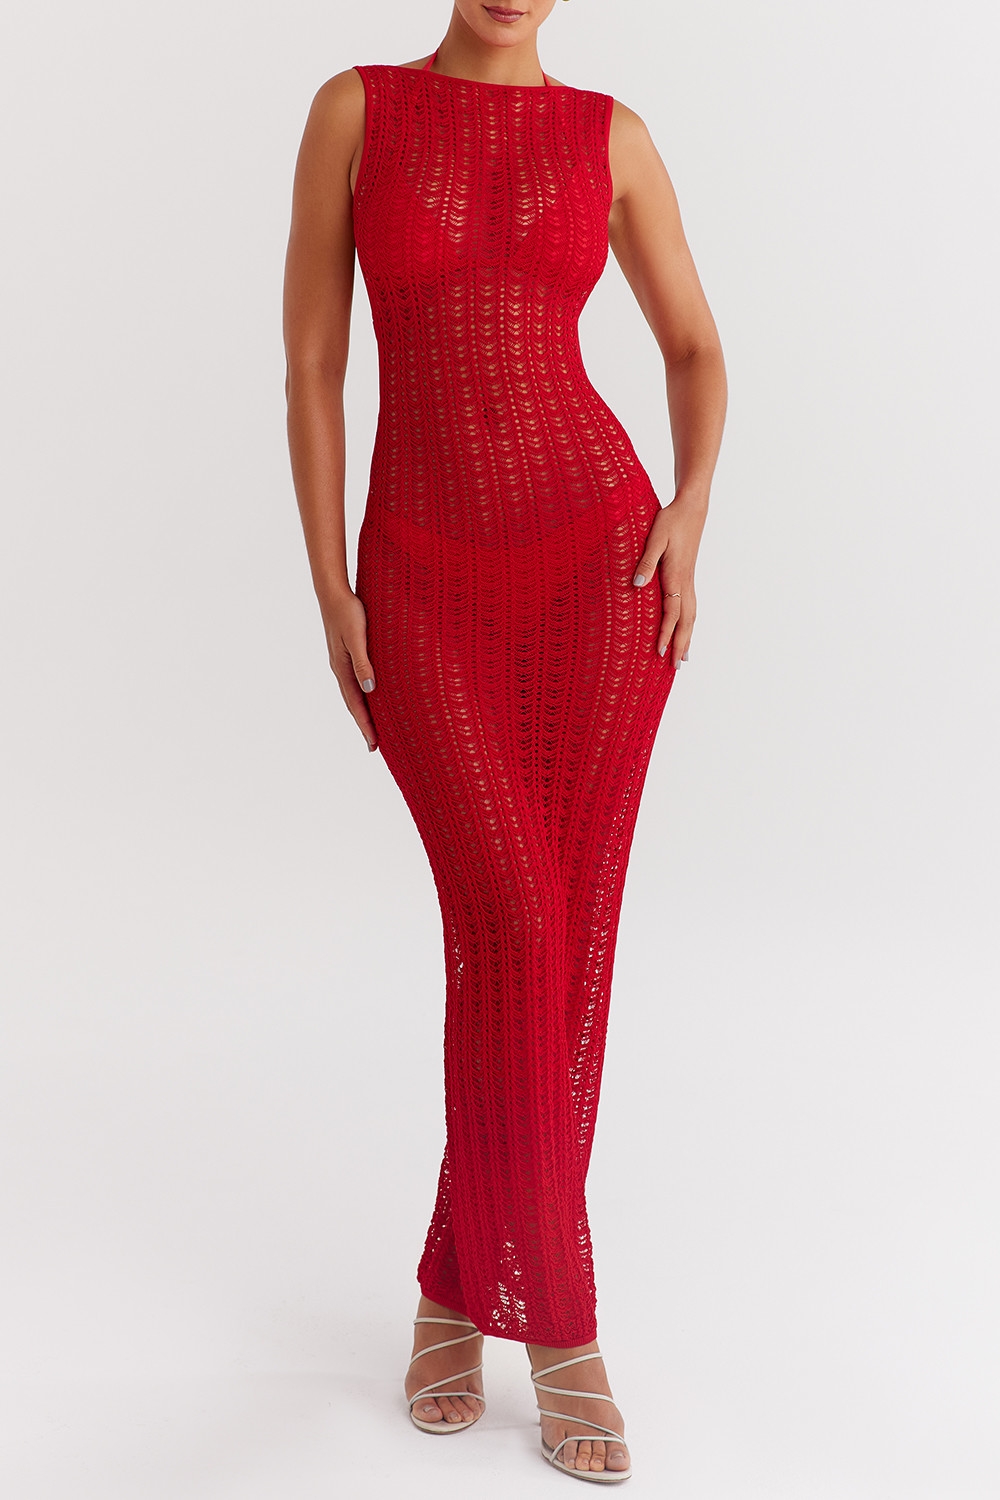 ,Mistress Rocks Red Knit Cover Up Maxi Dress